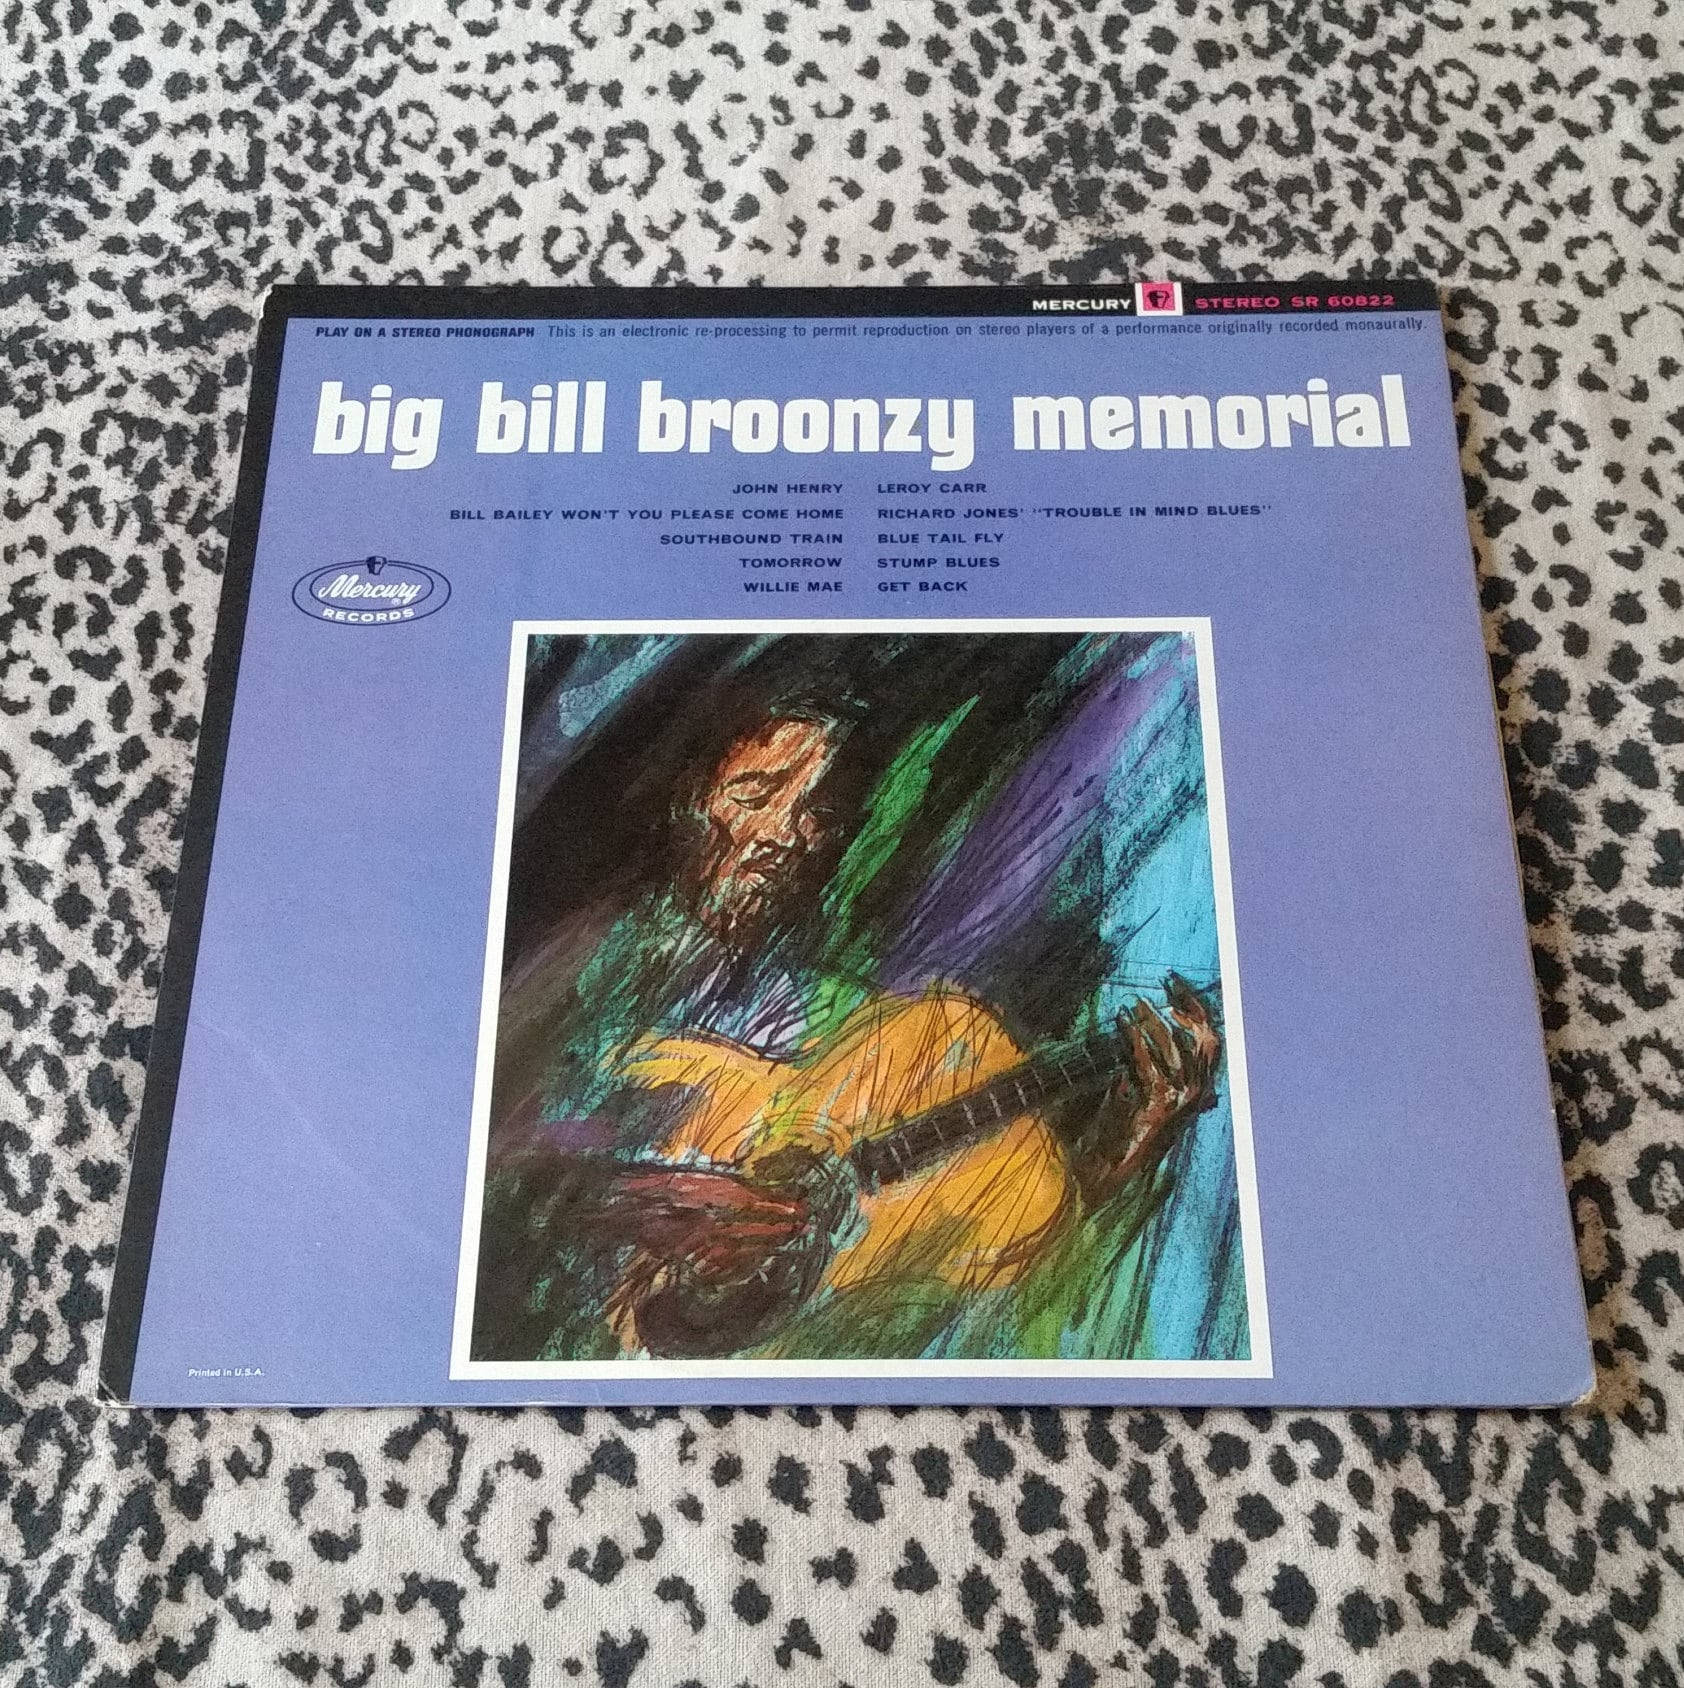 Storbill Broonzy Memorial Vinyl. Wallpaper